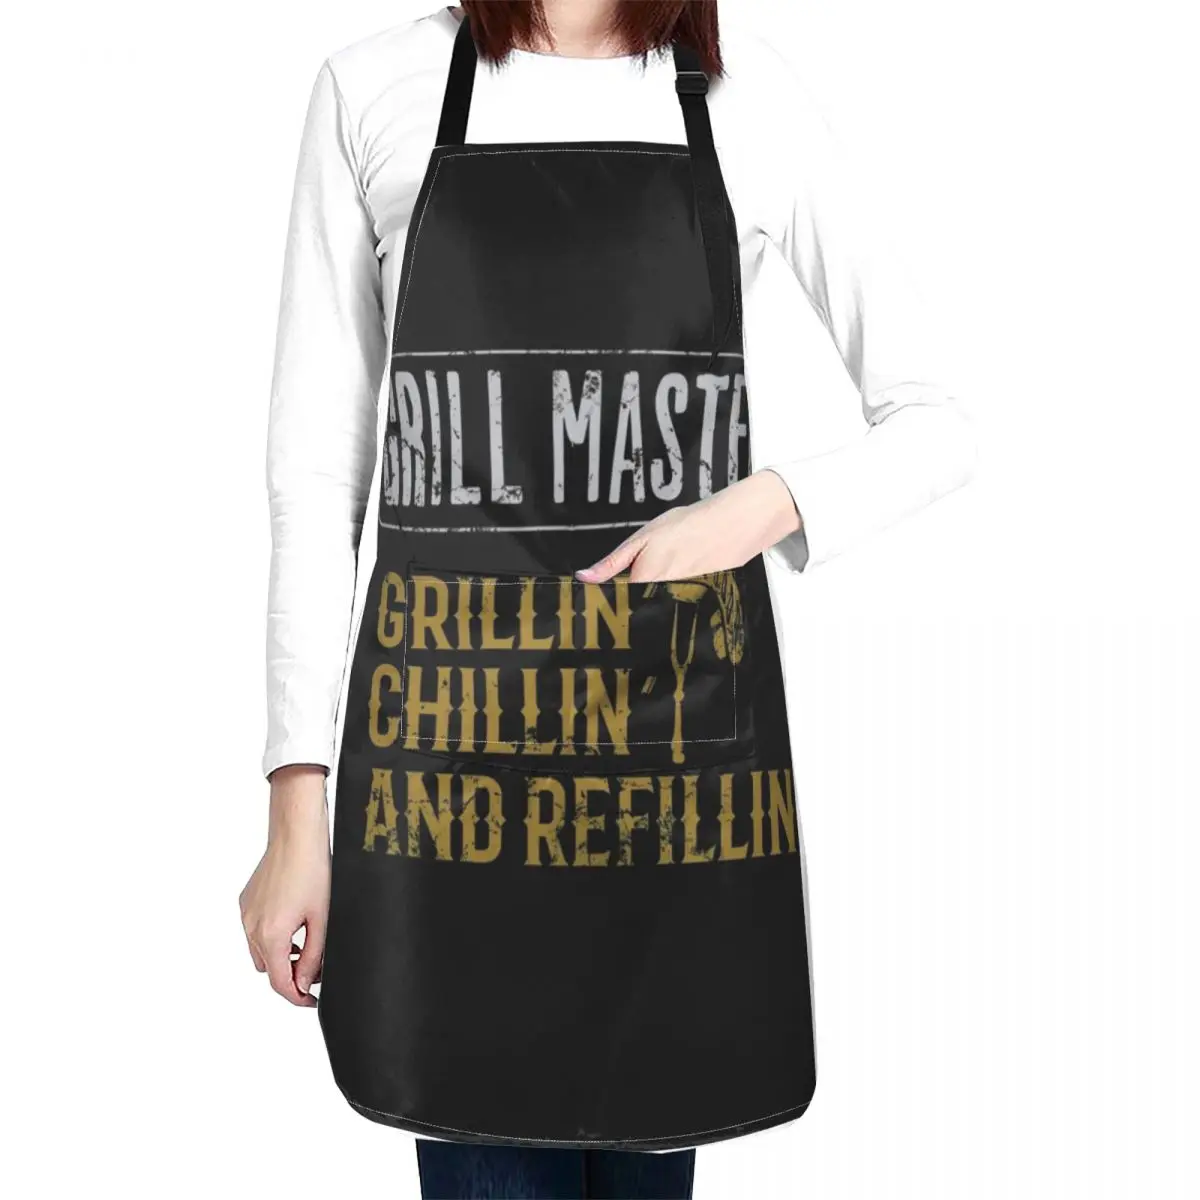 

BBQ Grill Master Grillin Chillin Refillin Apron Kitchen Apron For Women Kitchen Aprons Woman Kitchen Apras Man